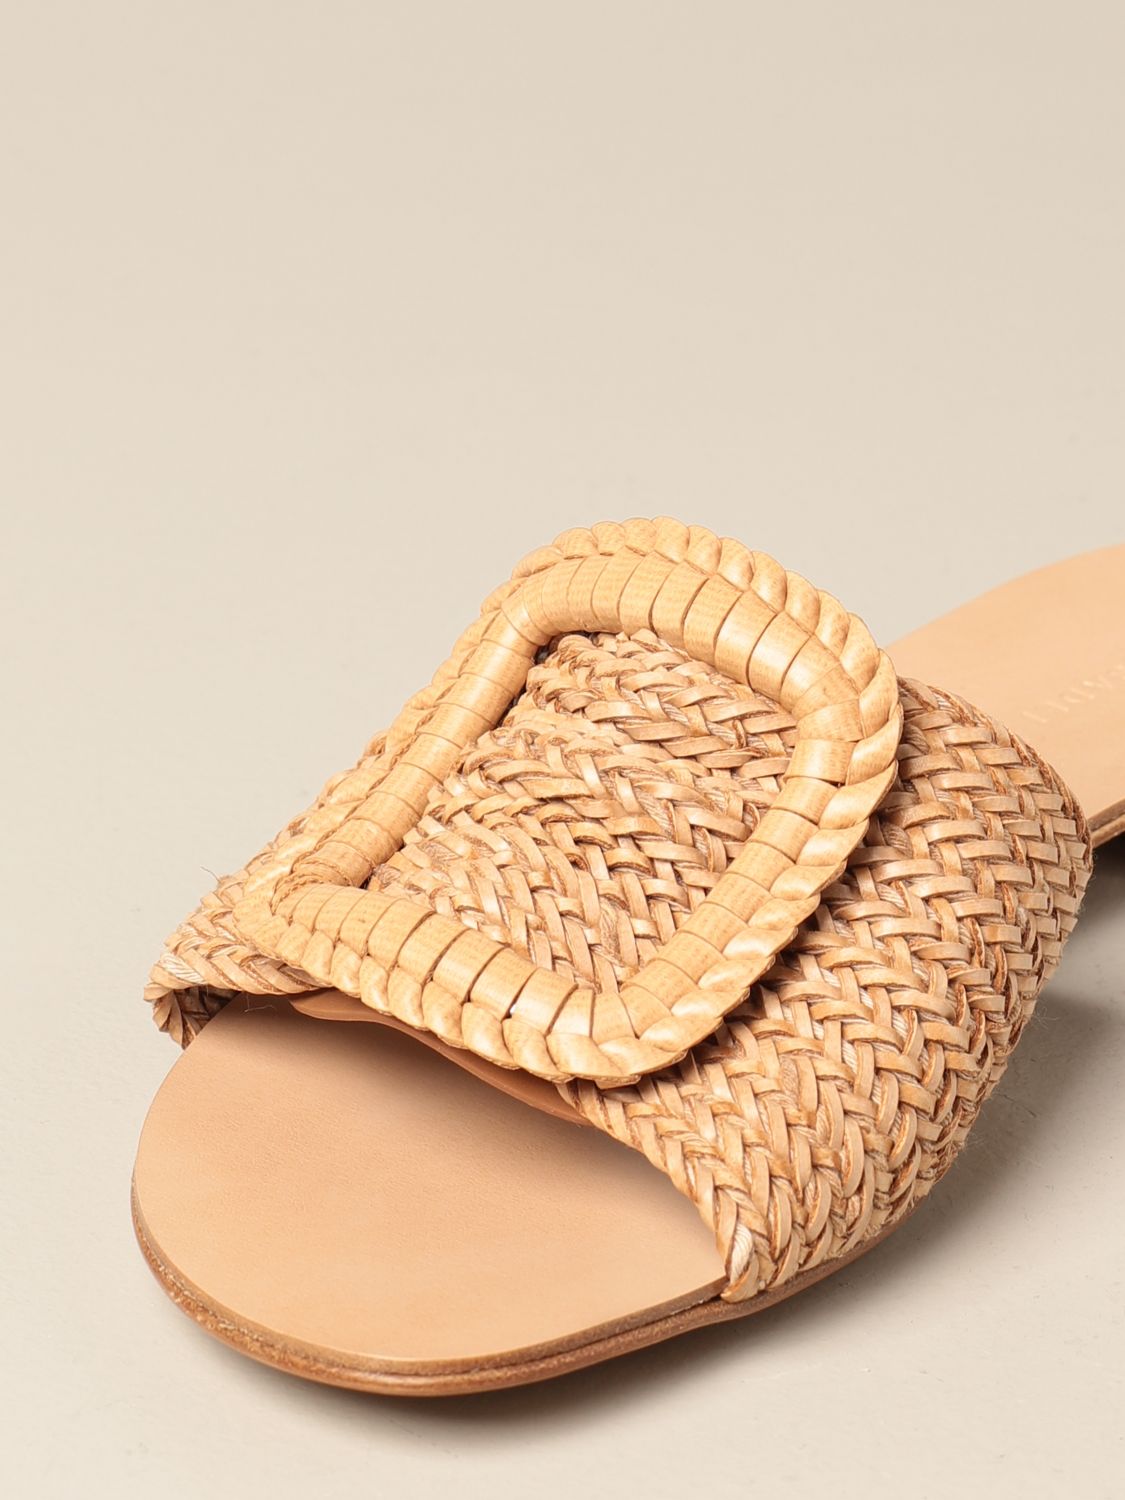 Casadei Andere materialien sandalen in Natur Damen Schuhe Flache Schuhe Flache Sandalen 